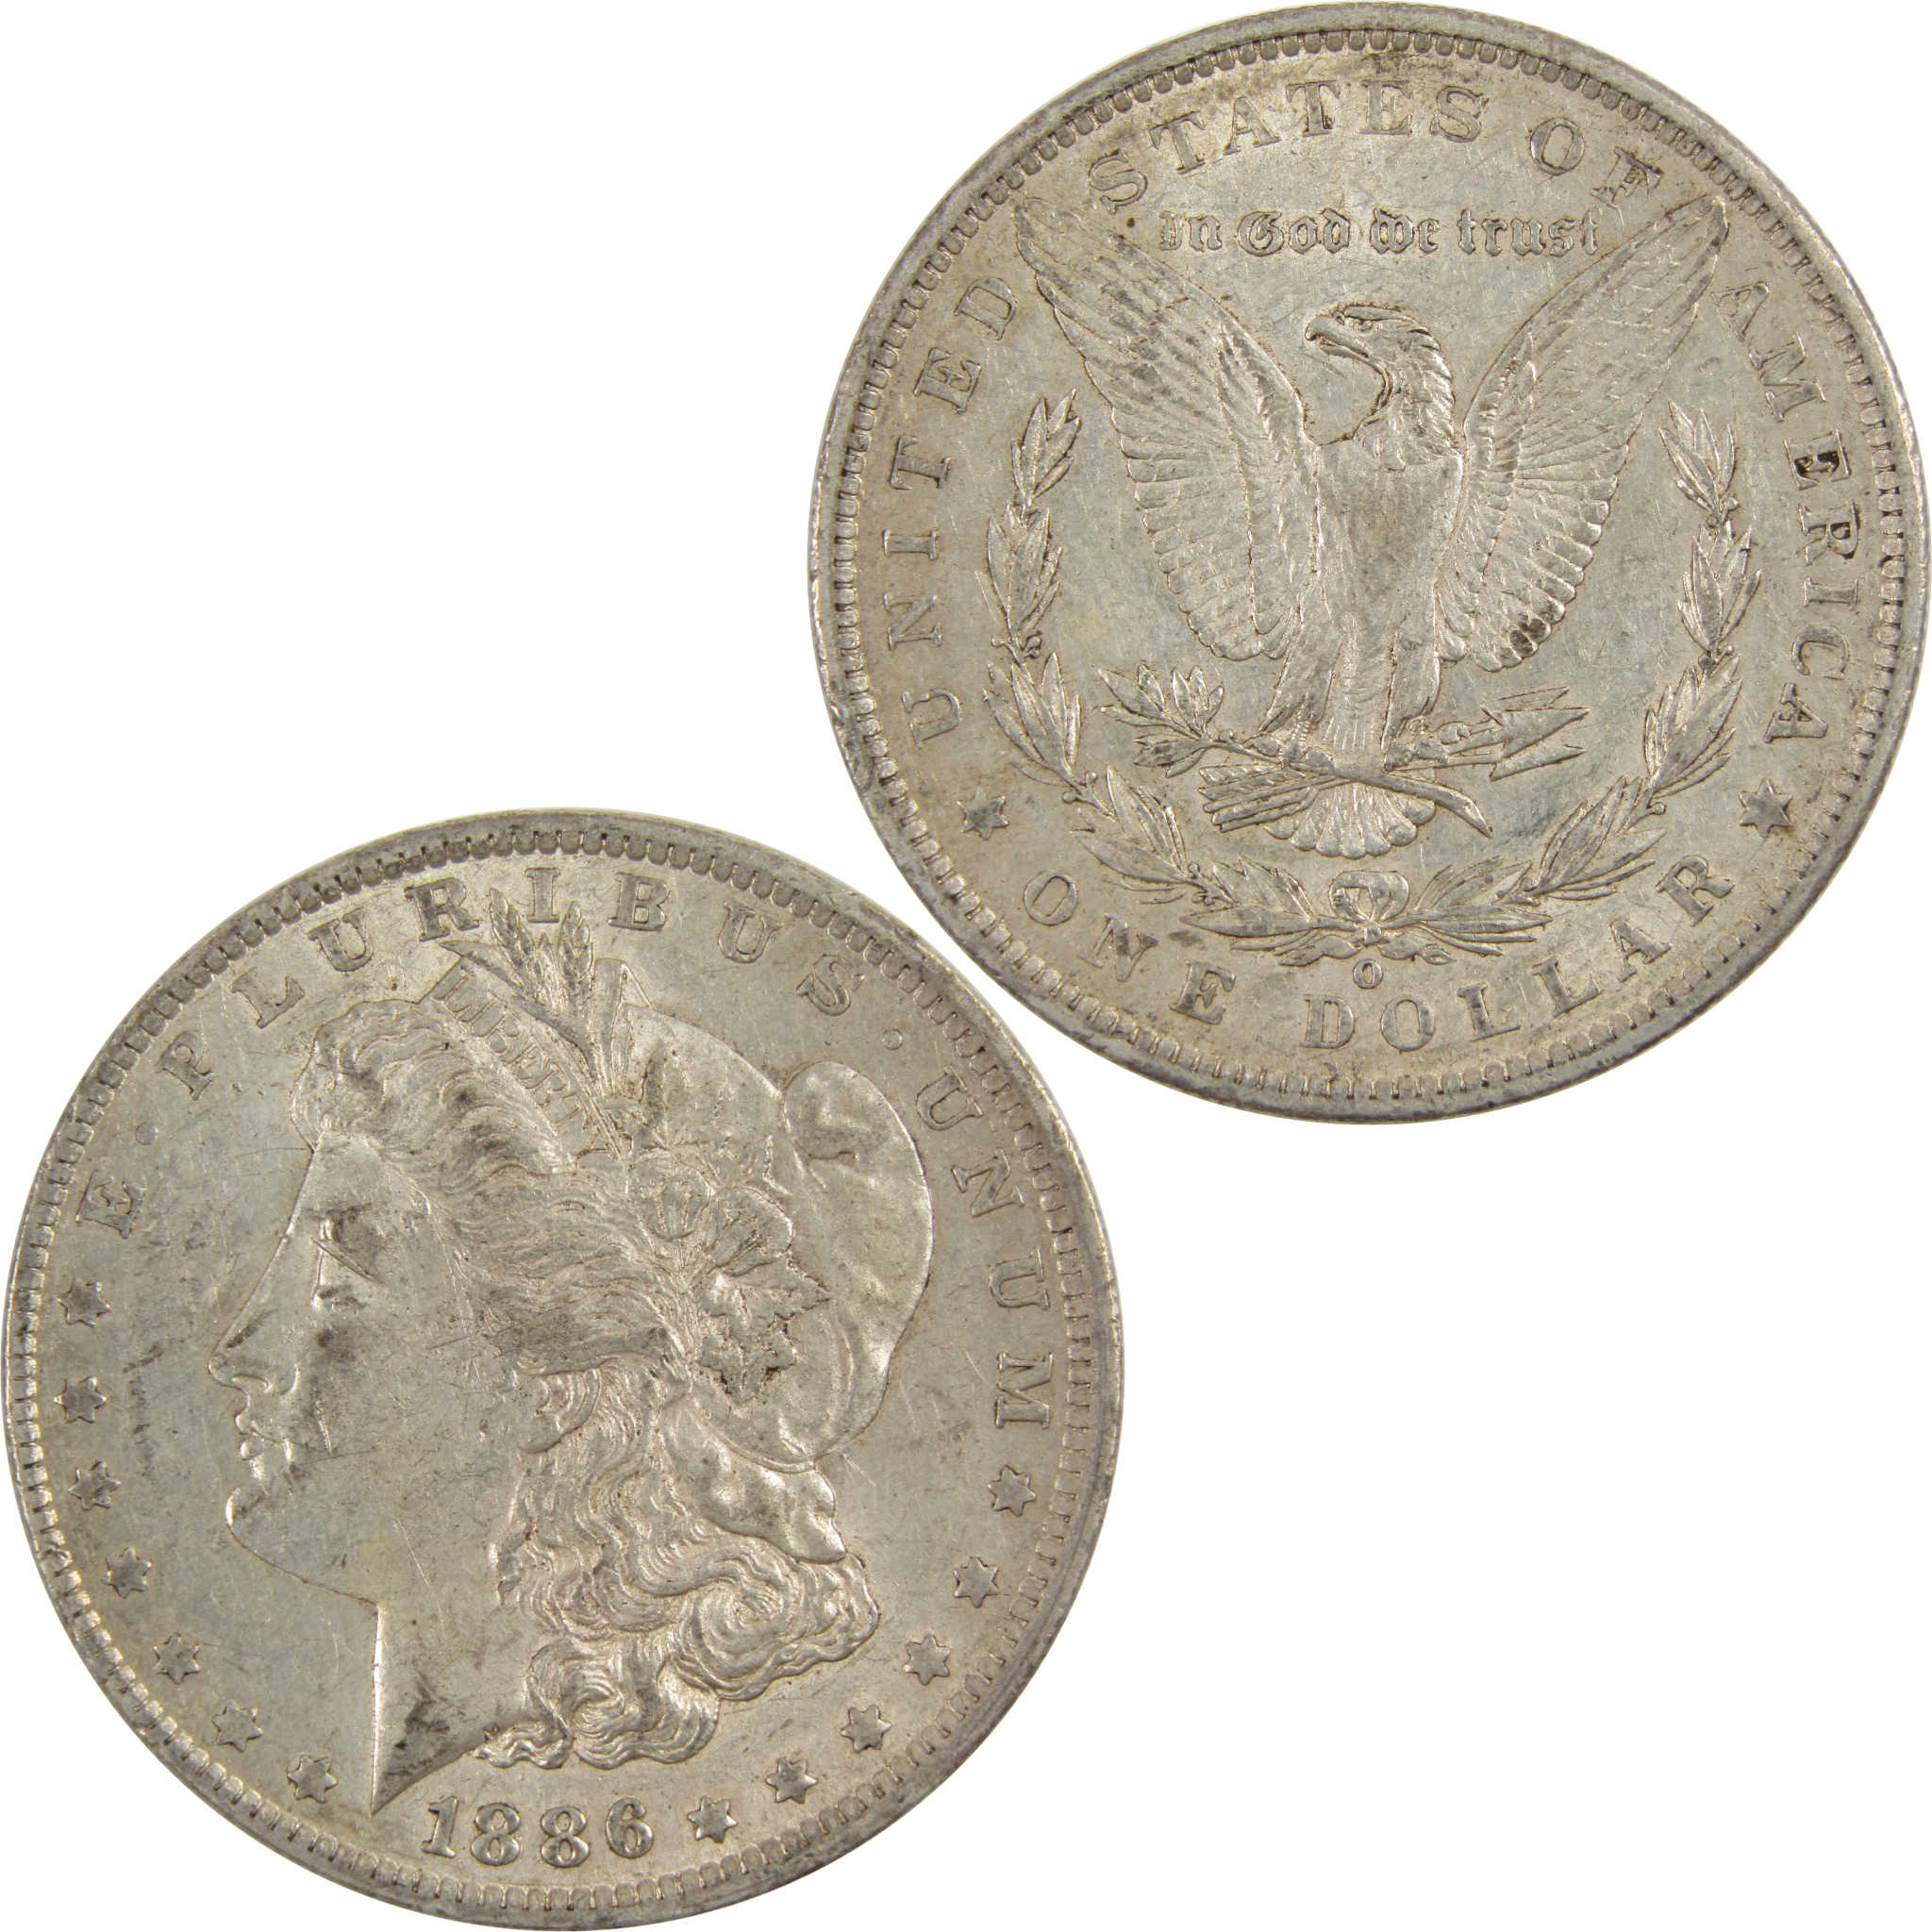 1886 O Morgan Dollar Borderline Uncirculated 90% Silver $1 SKU:I8088 - Morgan coin - Morgan silver dollar - Morgan silver dollar for sale - Profile Coins &amp; Collectibles